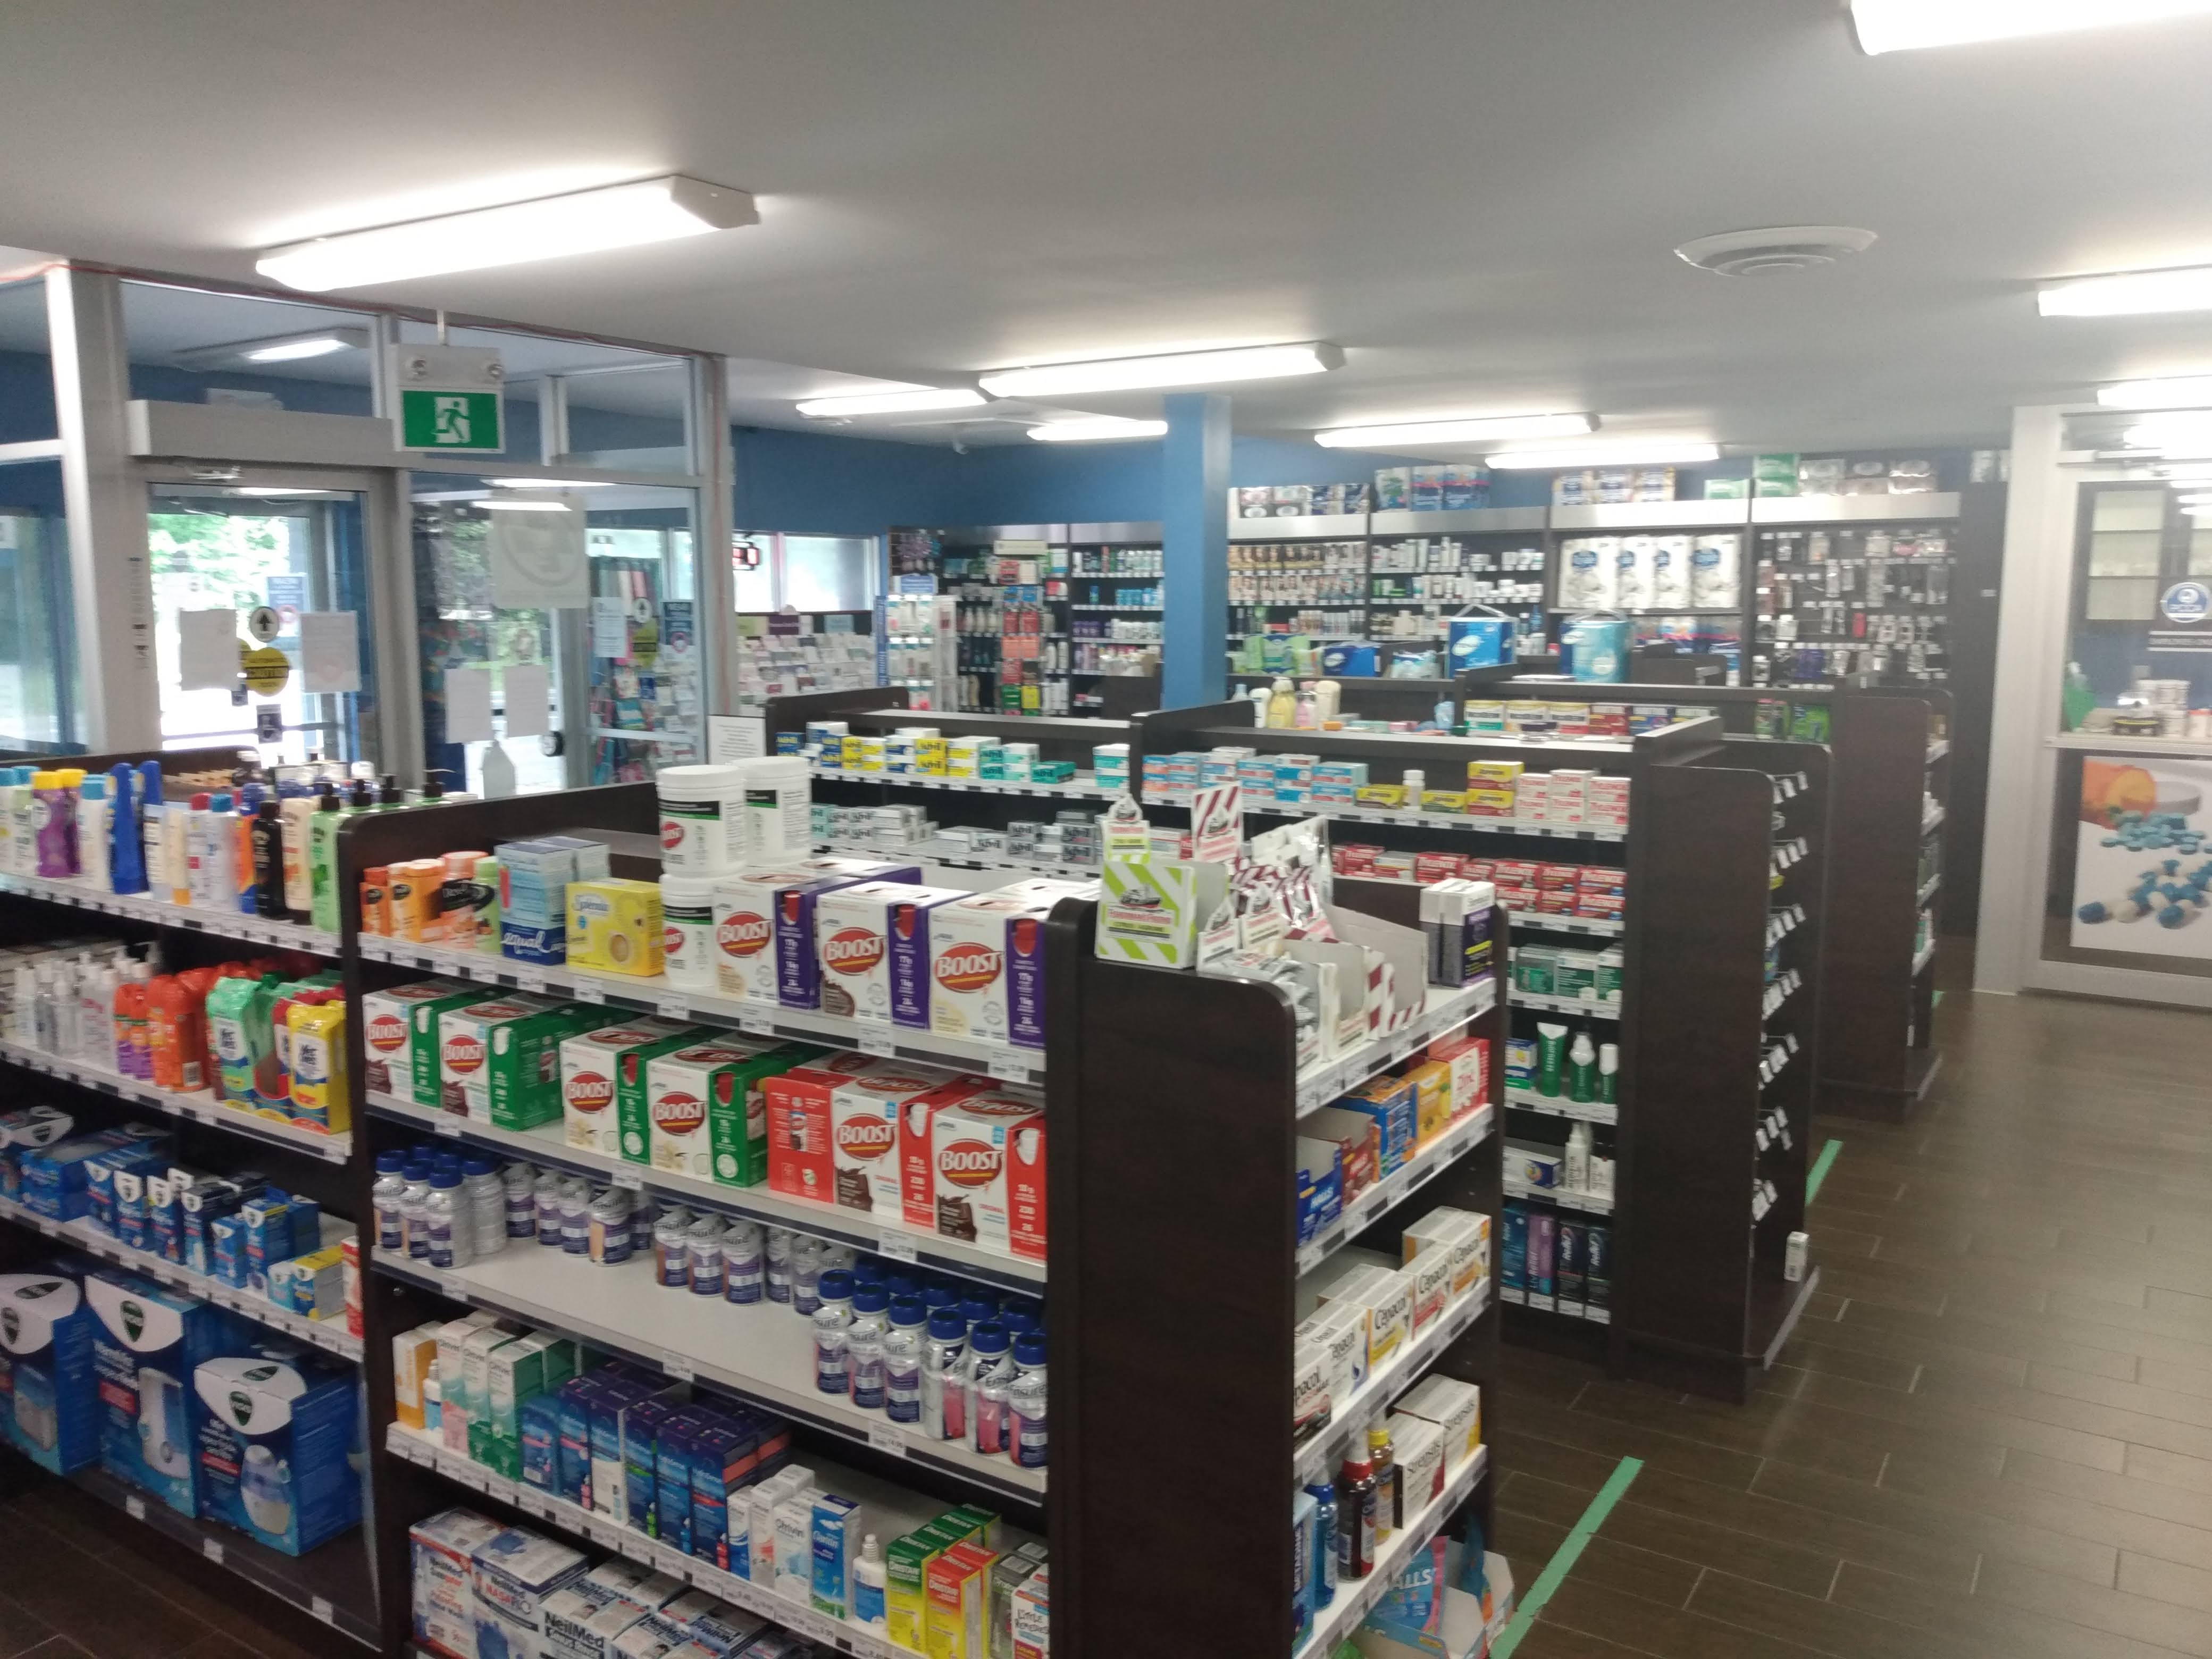 Grafton Pharmacy